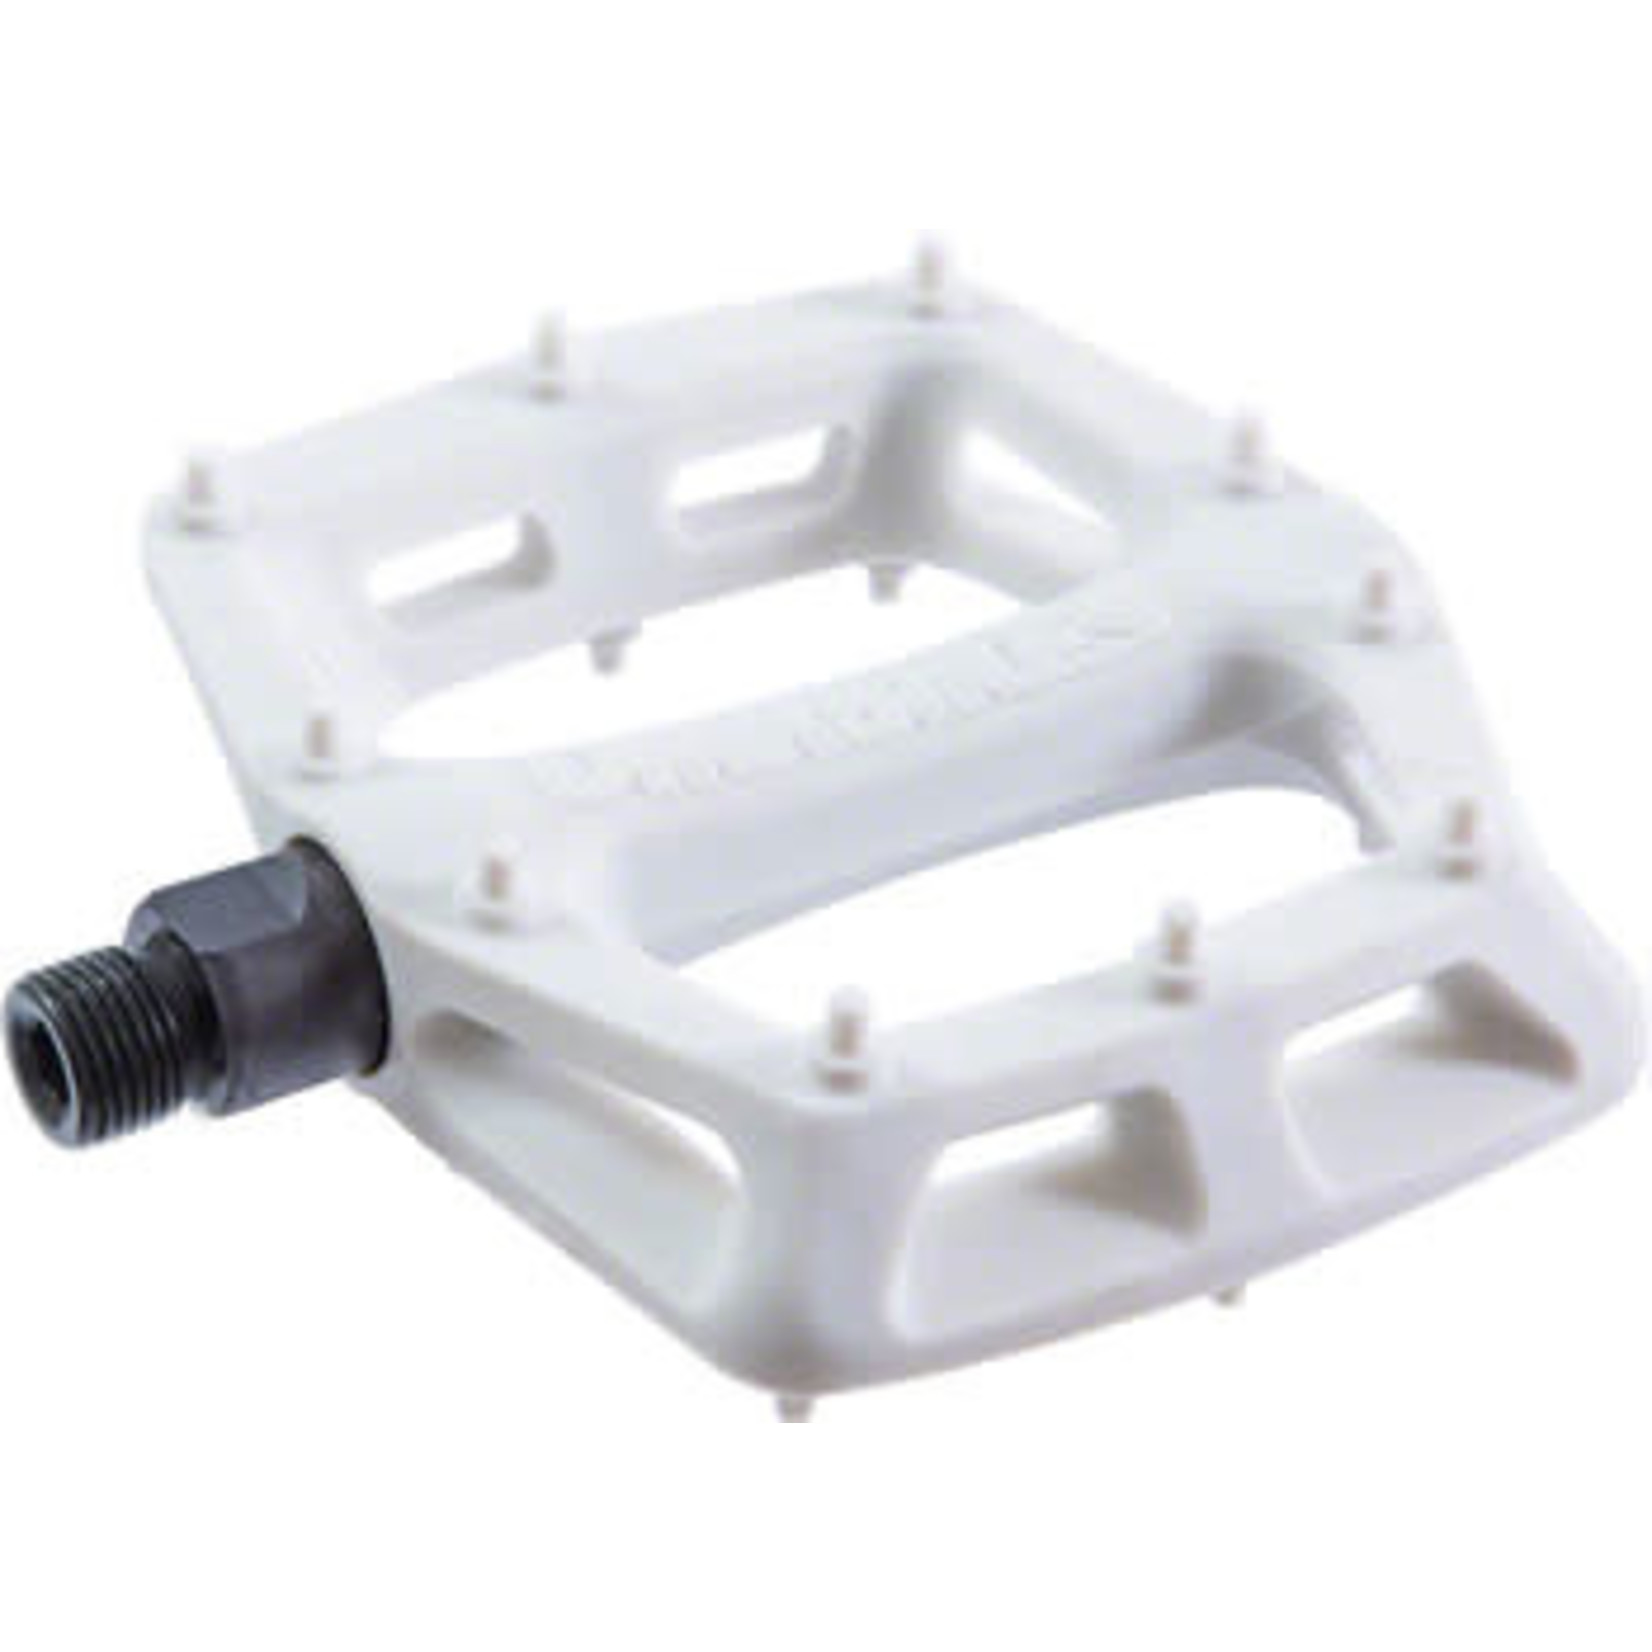 DMR V6 Pedals - Platform, Plastic, 9/16", White (PD3123)